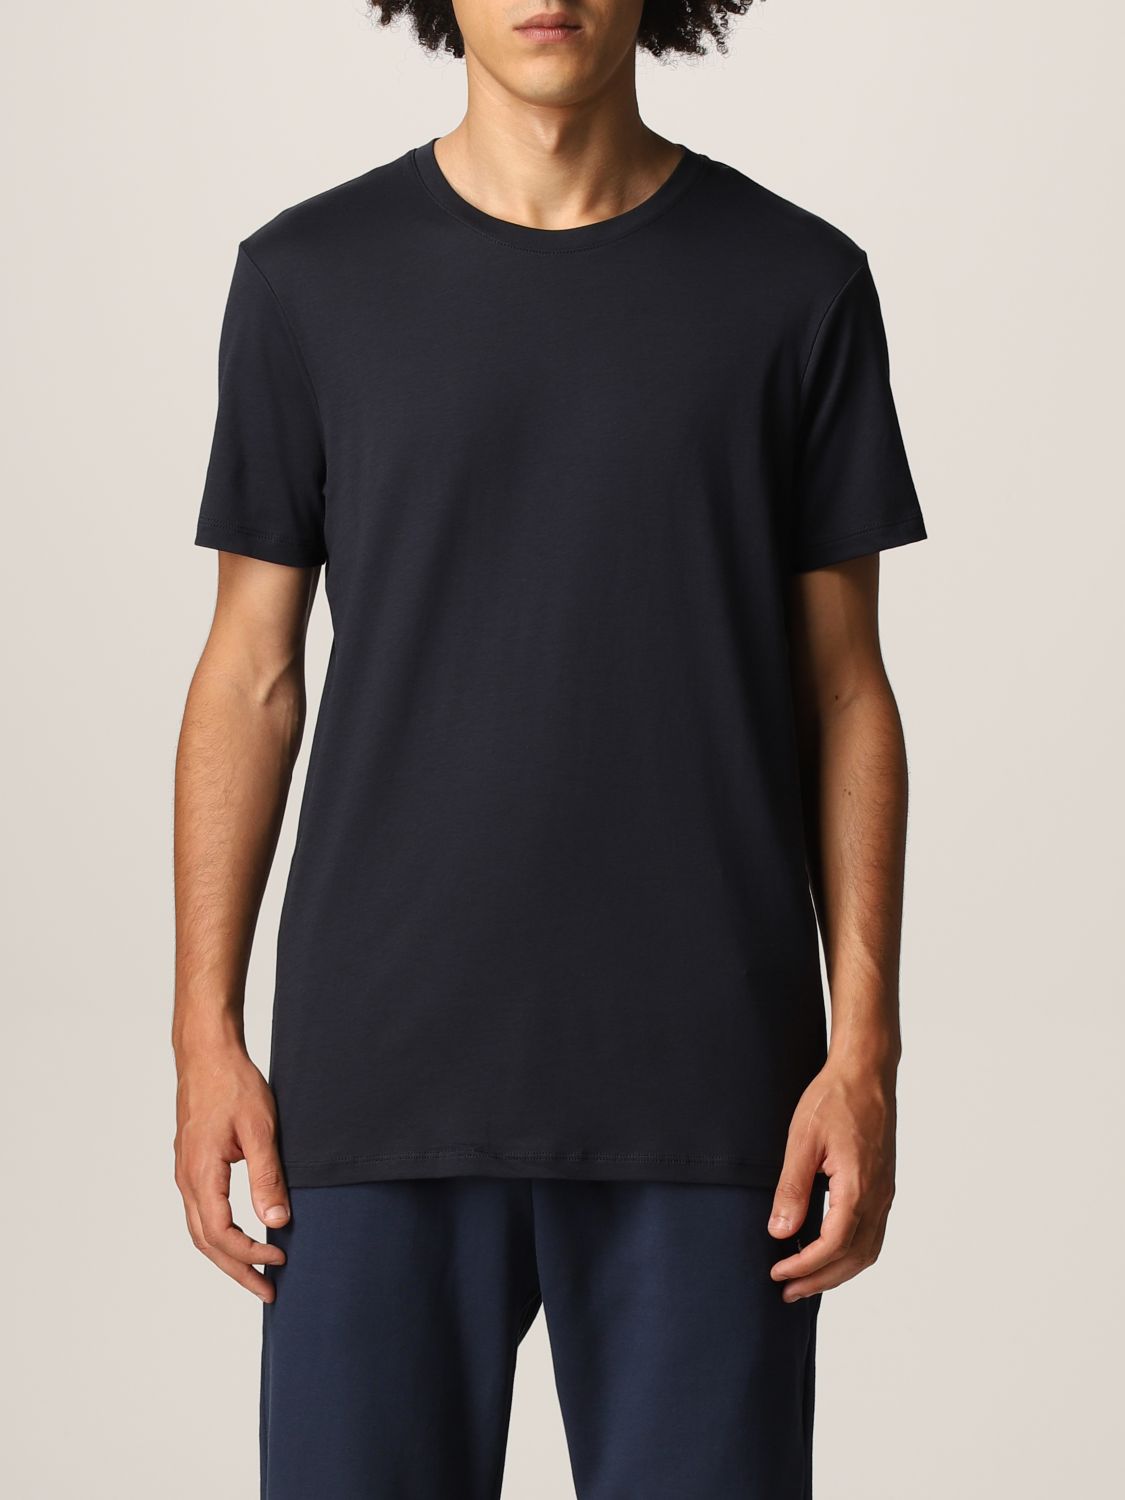 ARMANI EXCHANGE: T-shirt in cotton jersey - Blue | Armani Exchange t ...